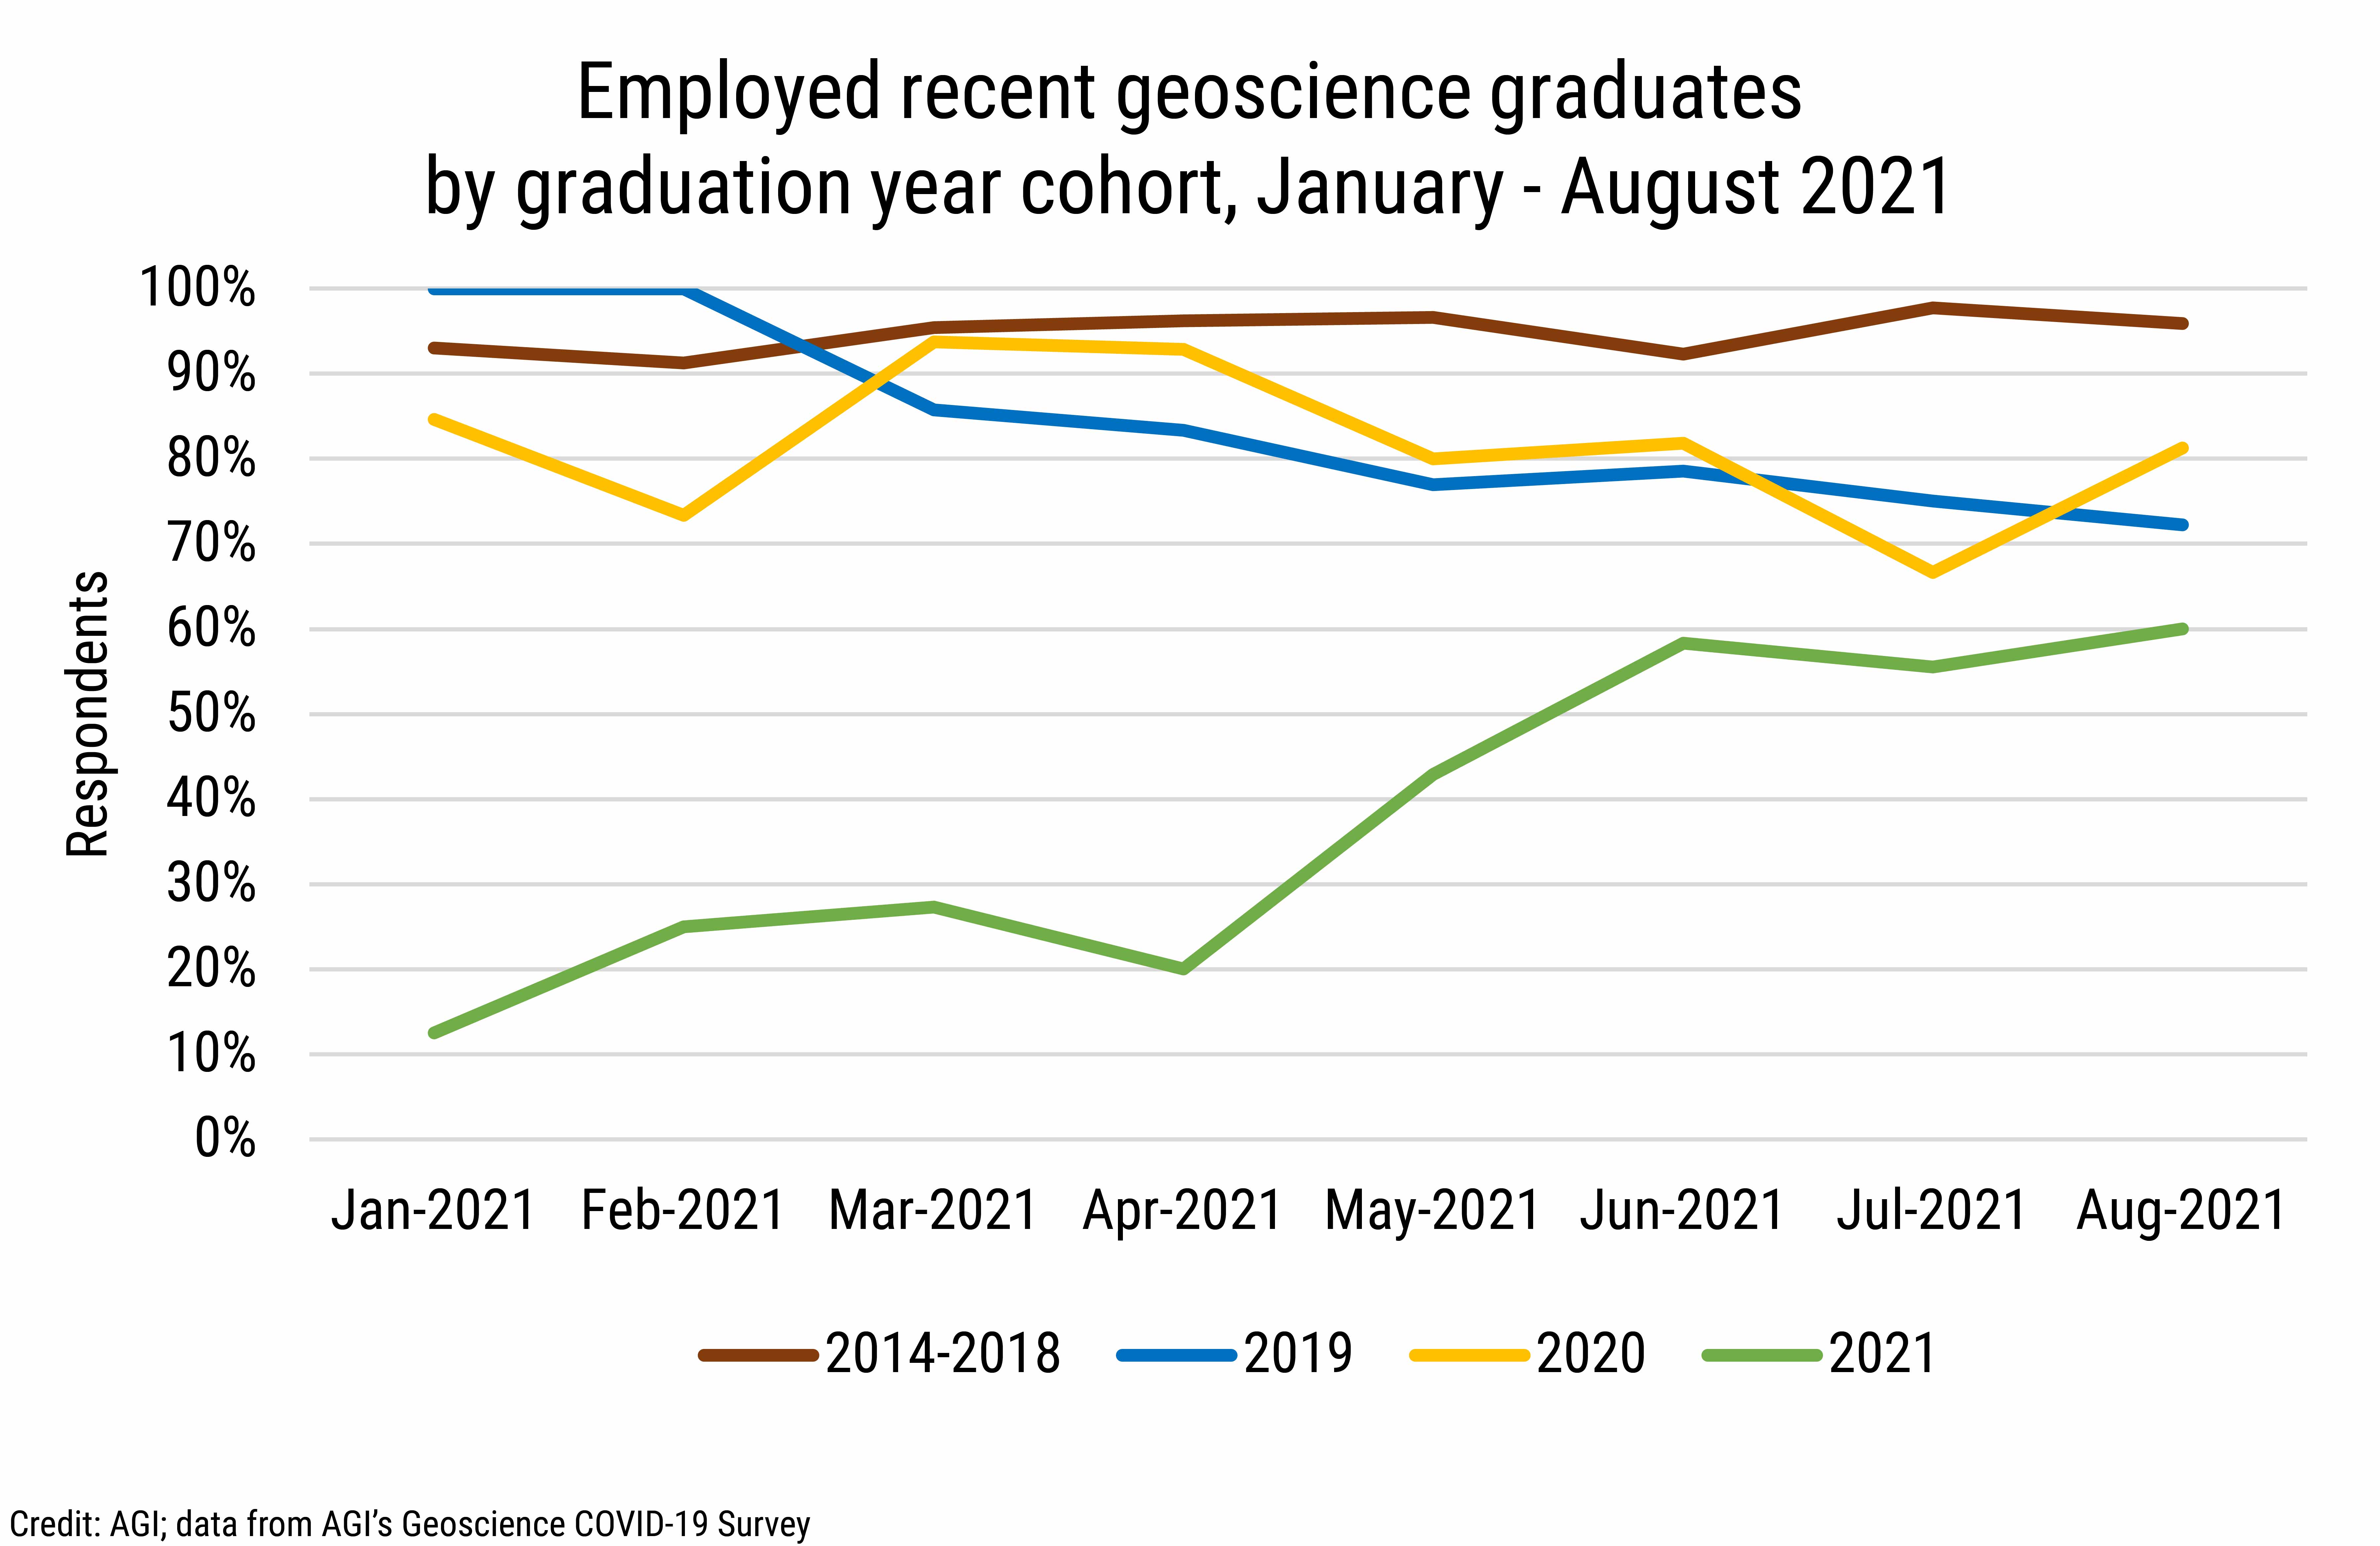 DB_2021-026 chart 05: Employed recent geoscience graduates by graduation year cohort, January - August 2021 (Credit: AGI; data from AGI's Geoscience COVID-19 Survey)